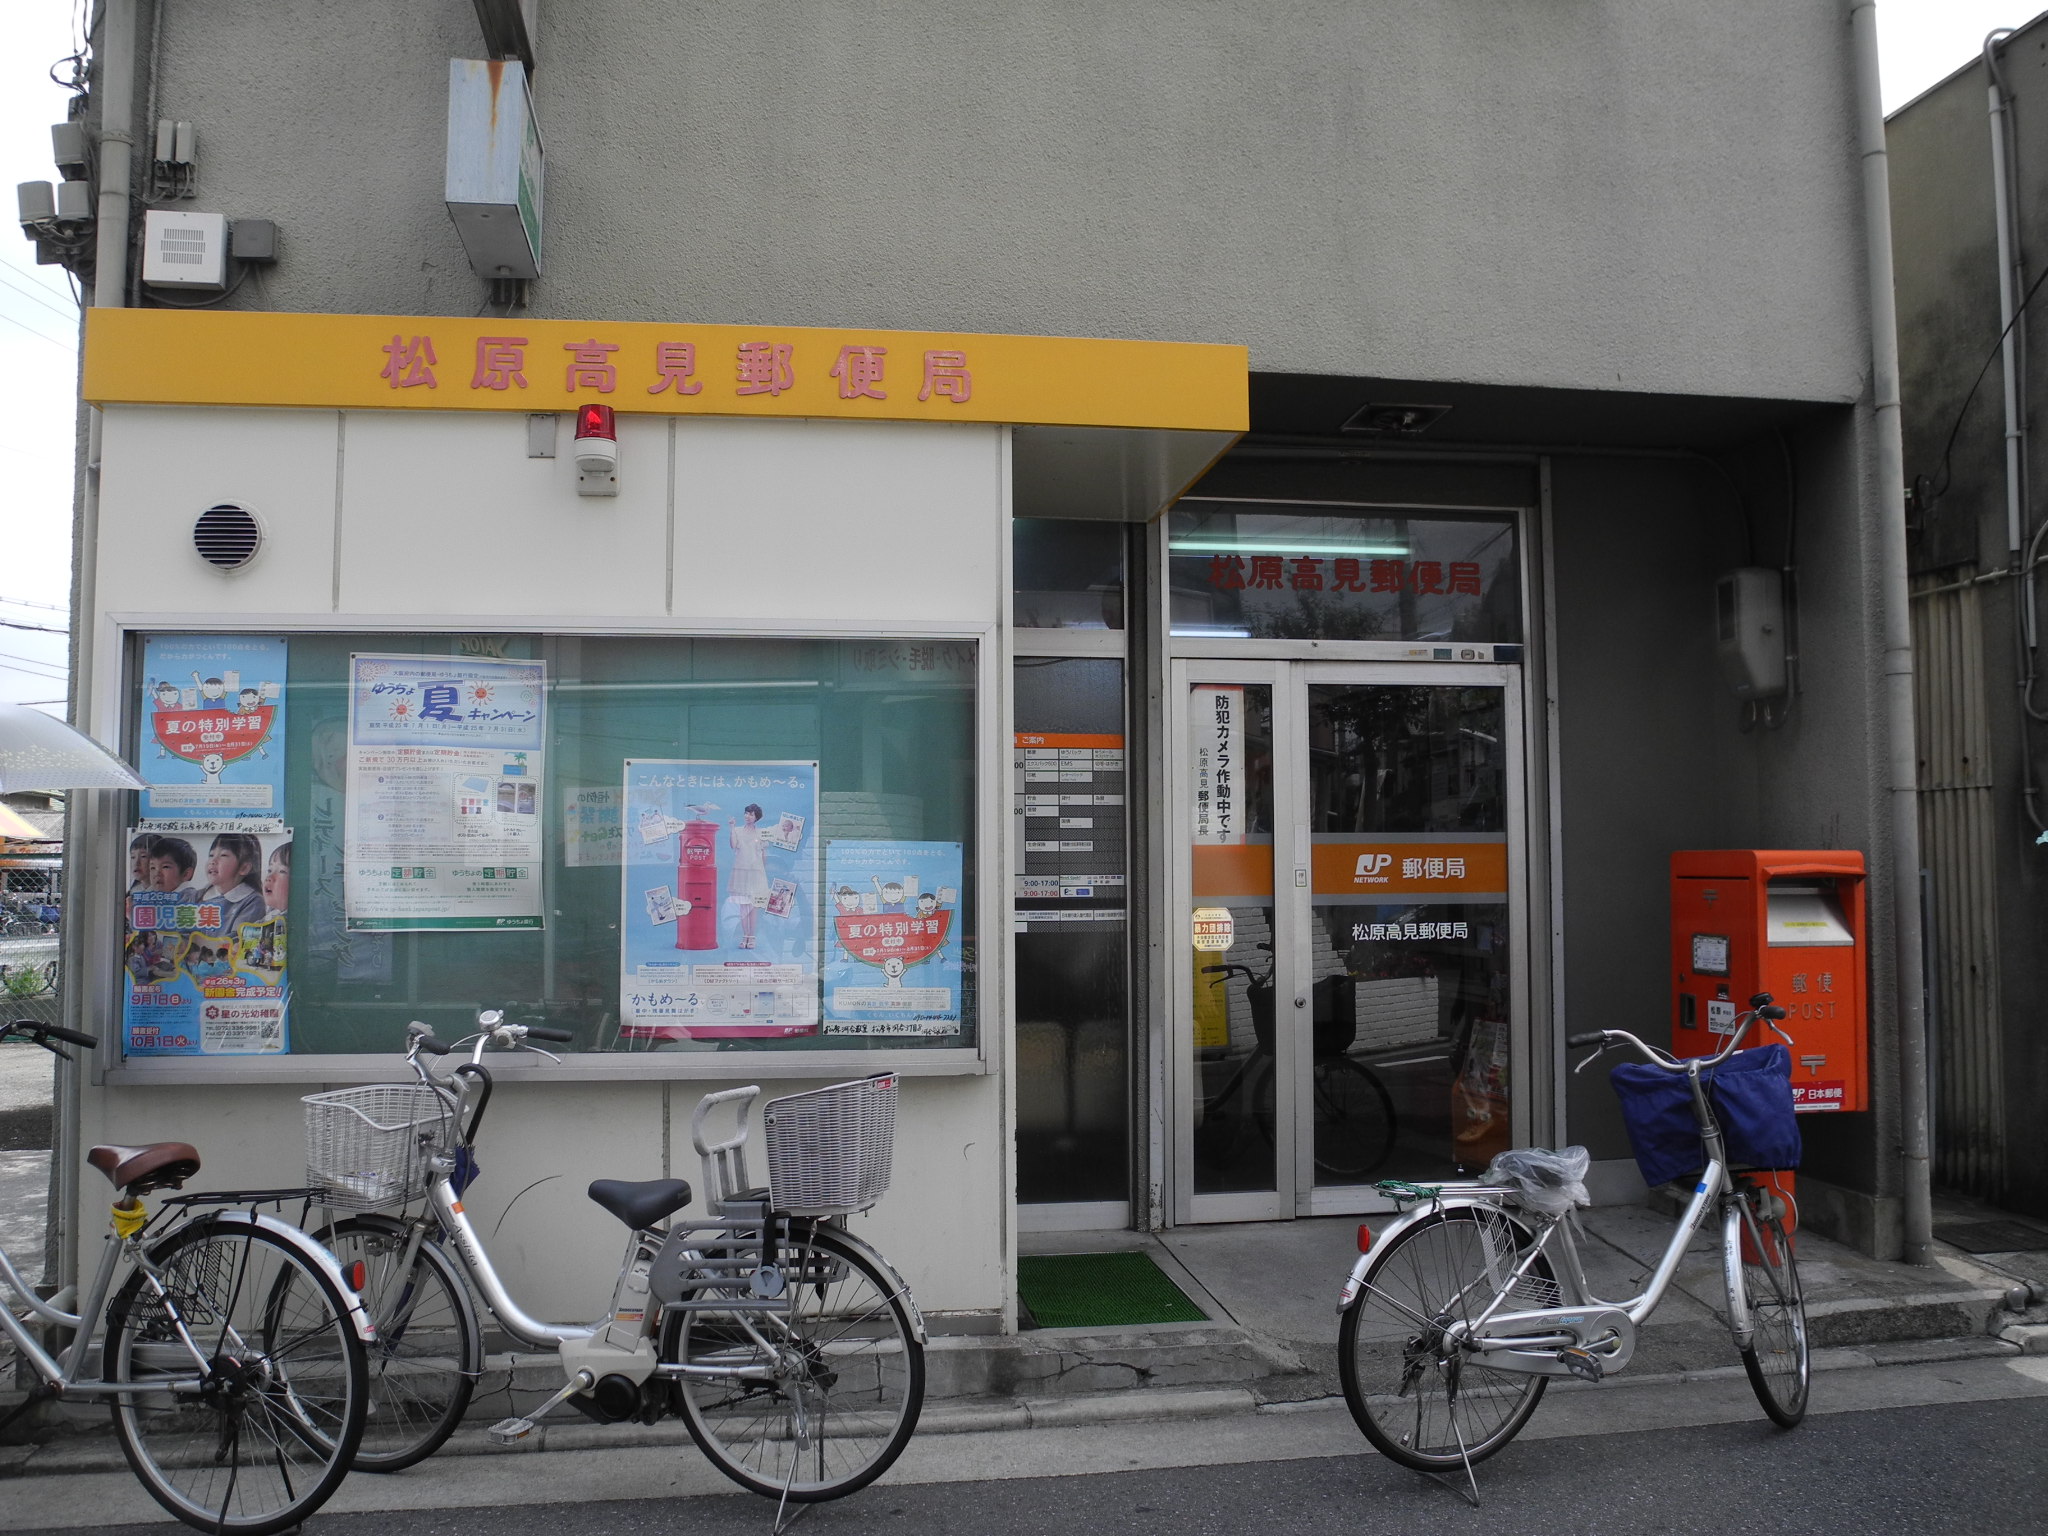 post office. 714m to Matsubara Takami post office (post office)